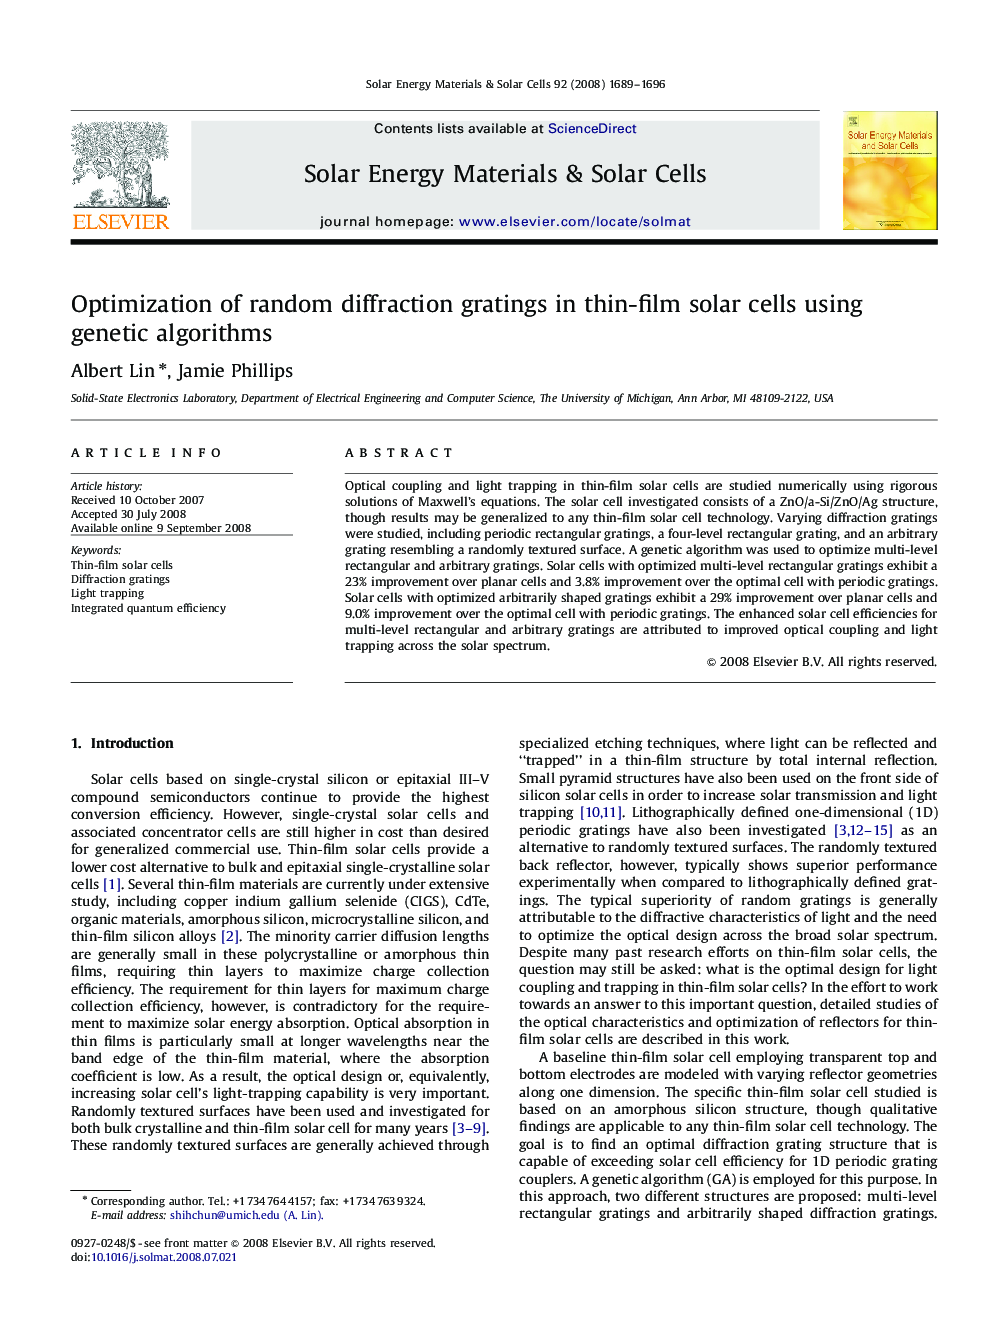 Optimization of random diffraction gratings in thin-film solar cells using genetic algorithms